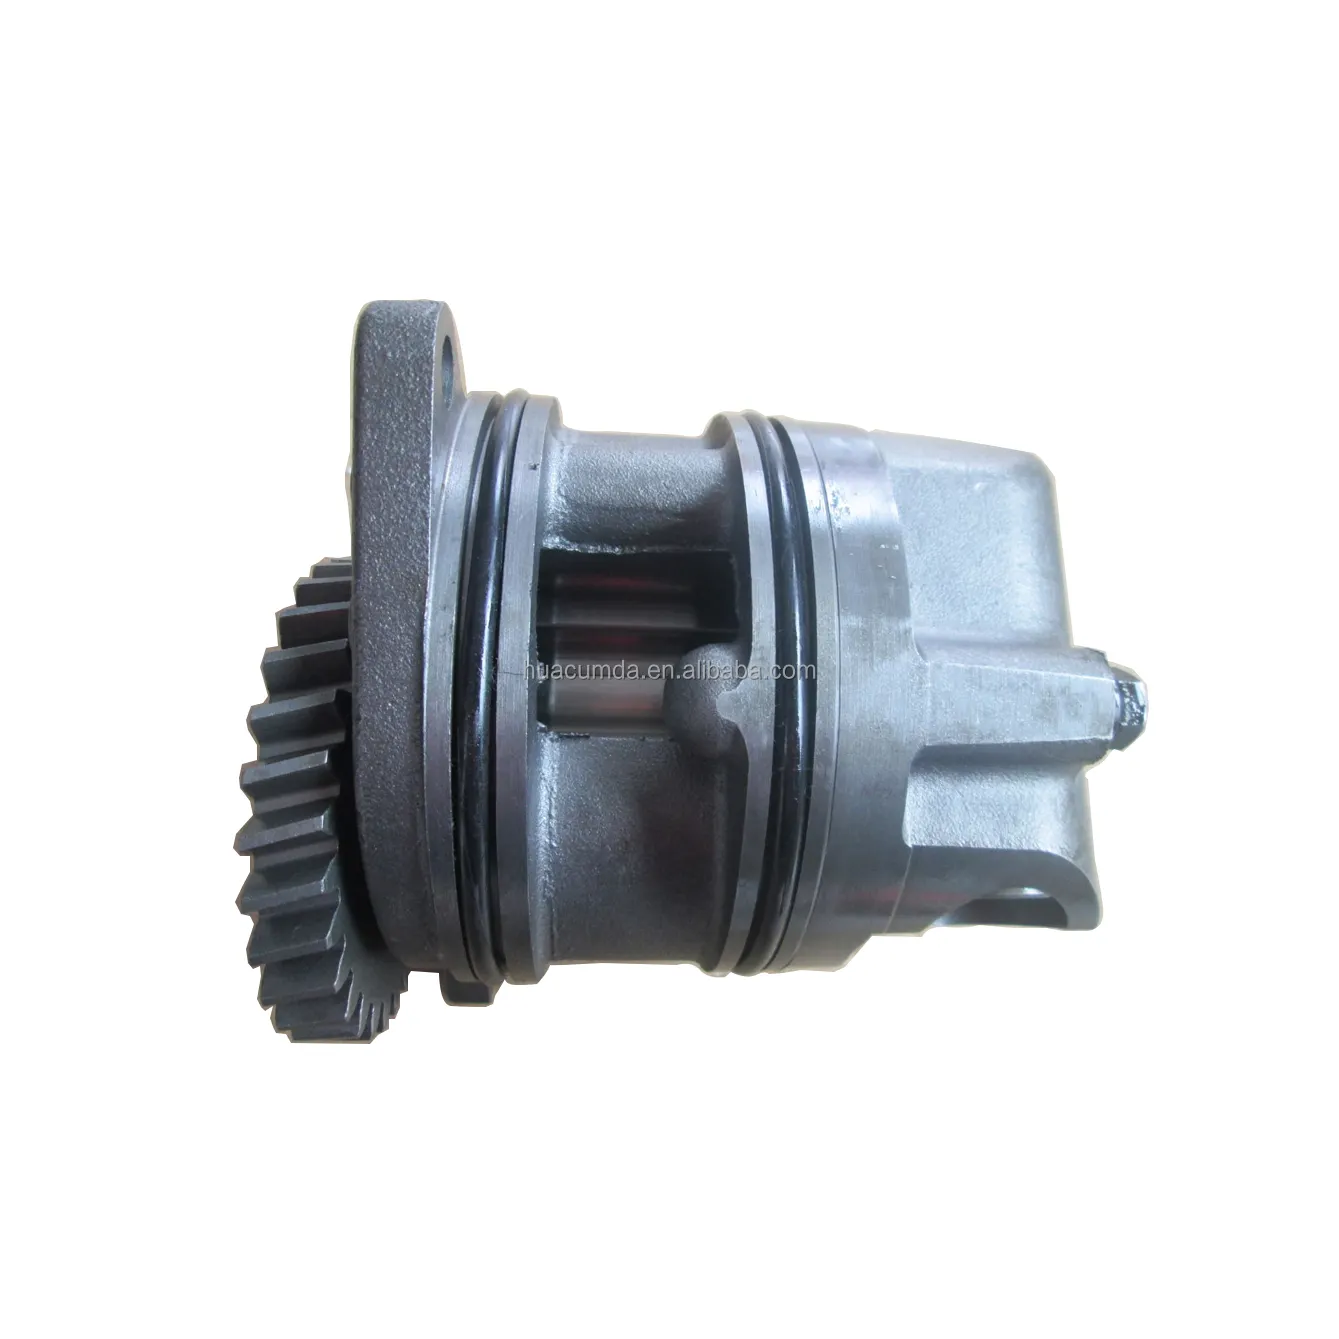 New Oil Lub Pump 3009955 3047549 3201119 Compatible with Cum mins K19 KTA19 Diesel Engine Oil Pump